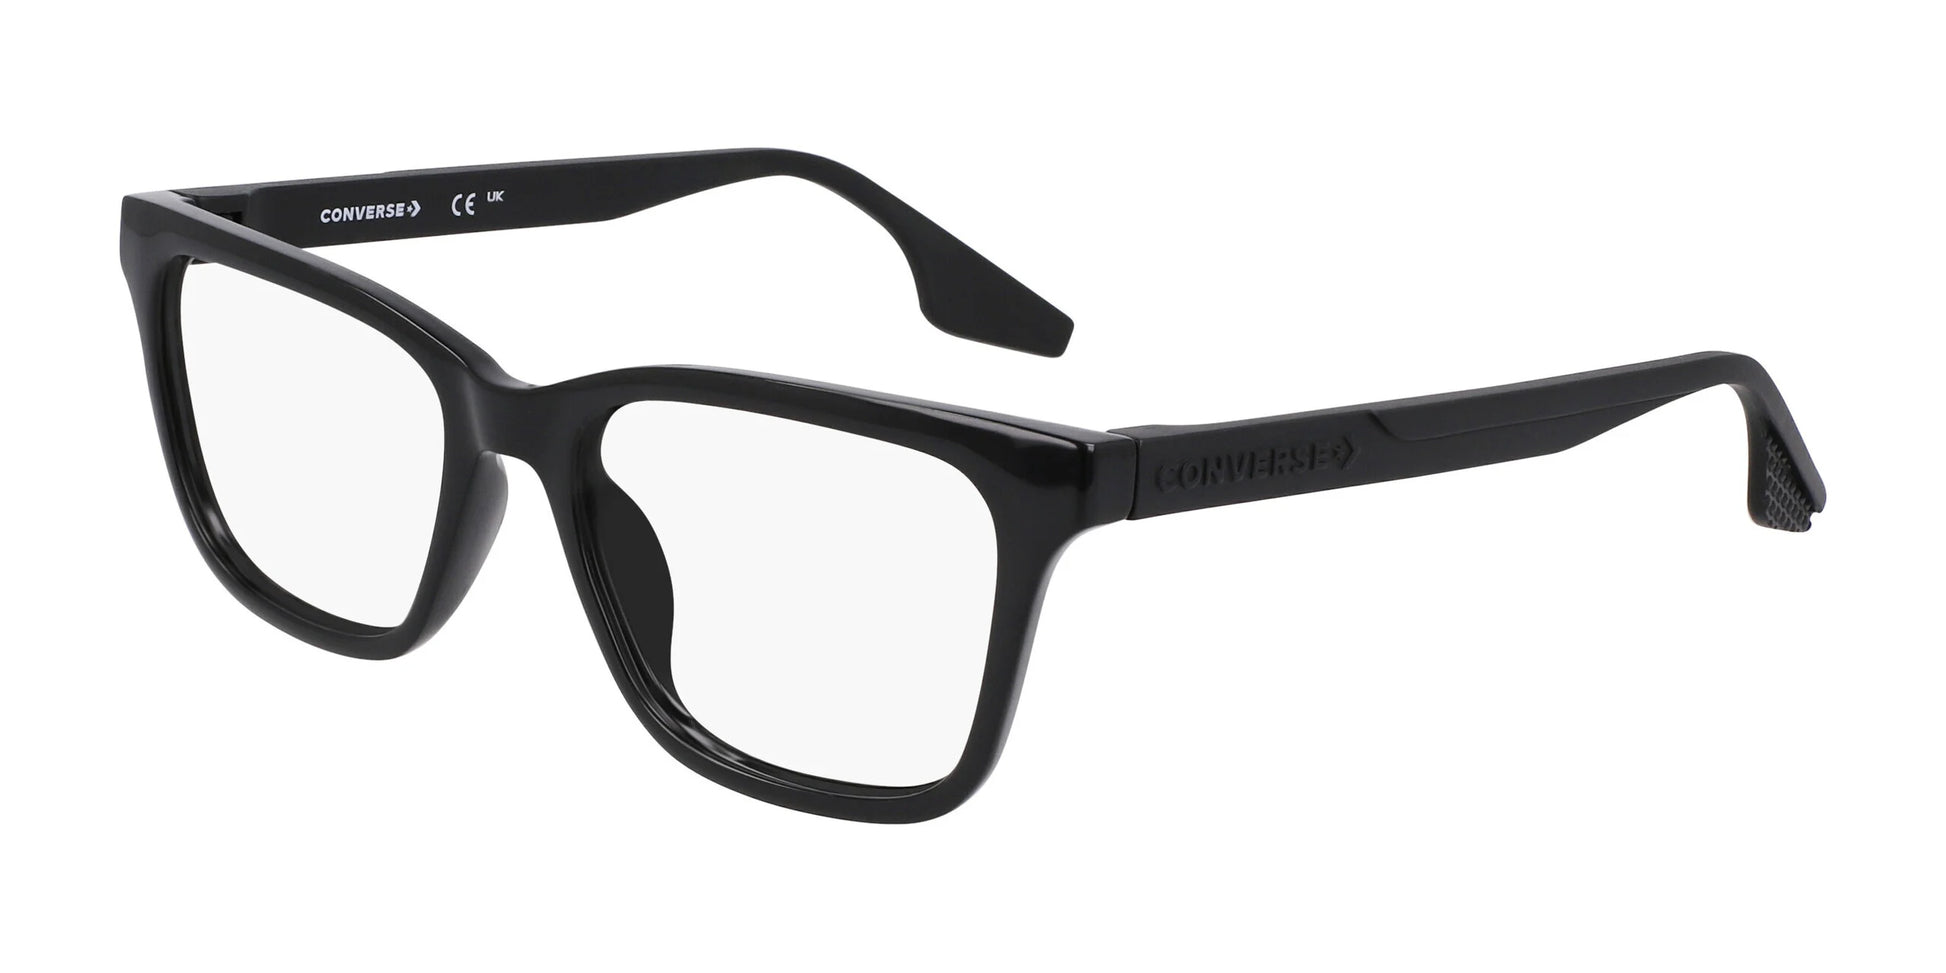 Converse CV5105 Eyeglasses Black